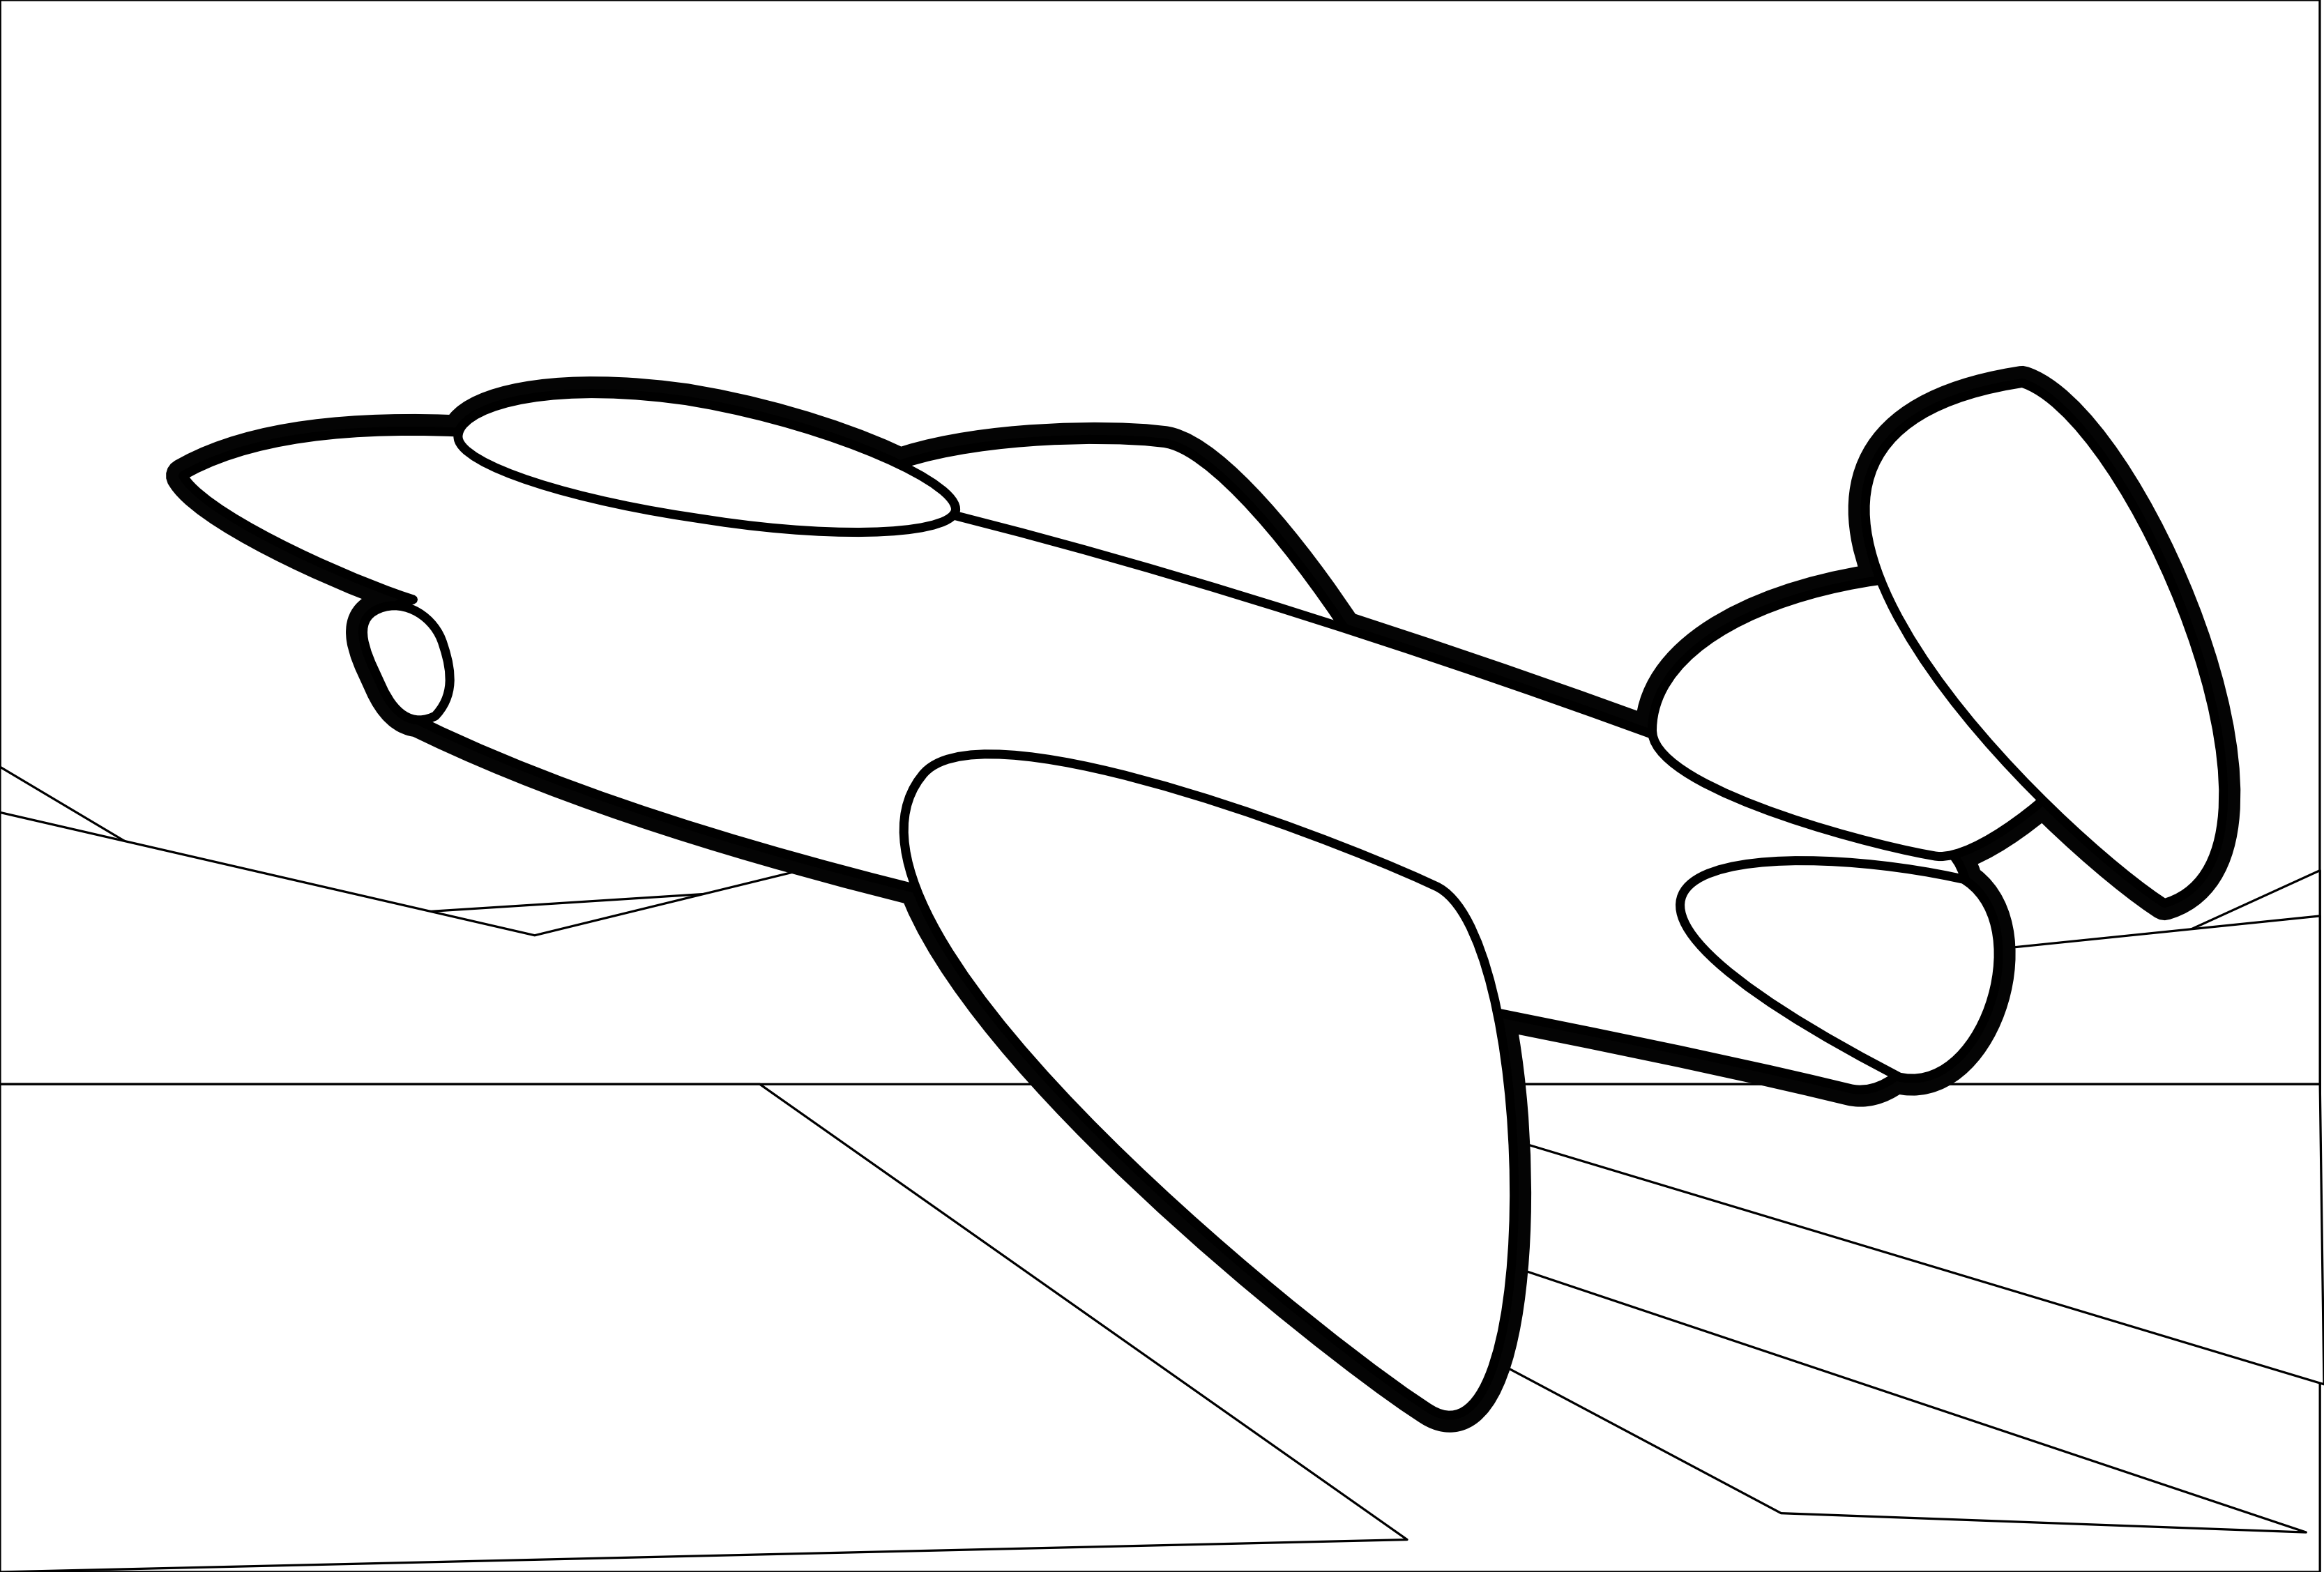 Clip Art Klsgfx Jet 2 Coloring Book Colouring Black White Line Art ...